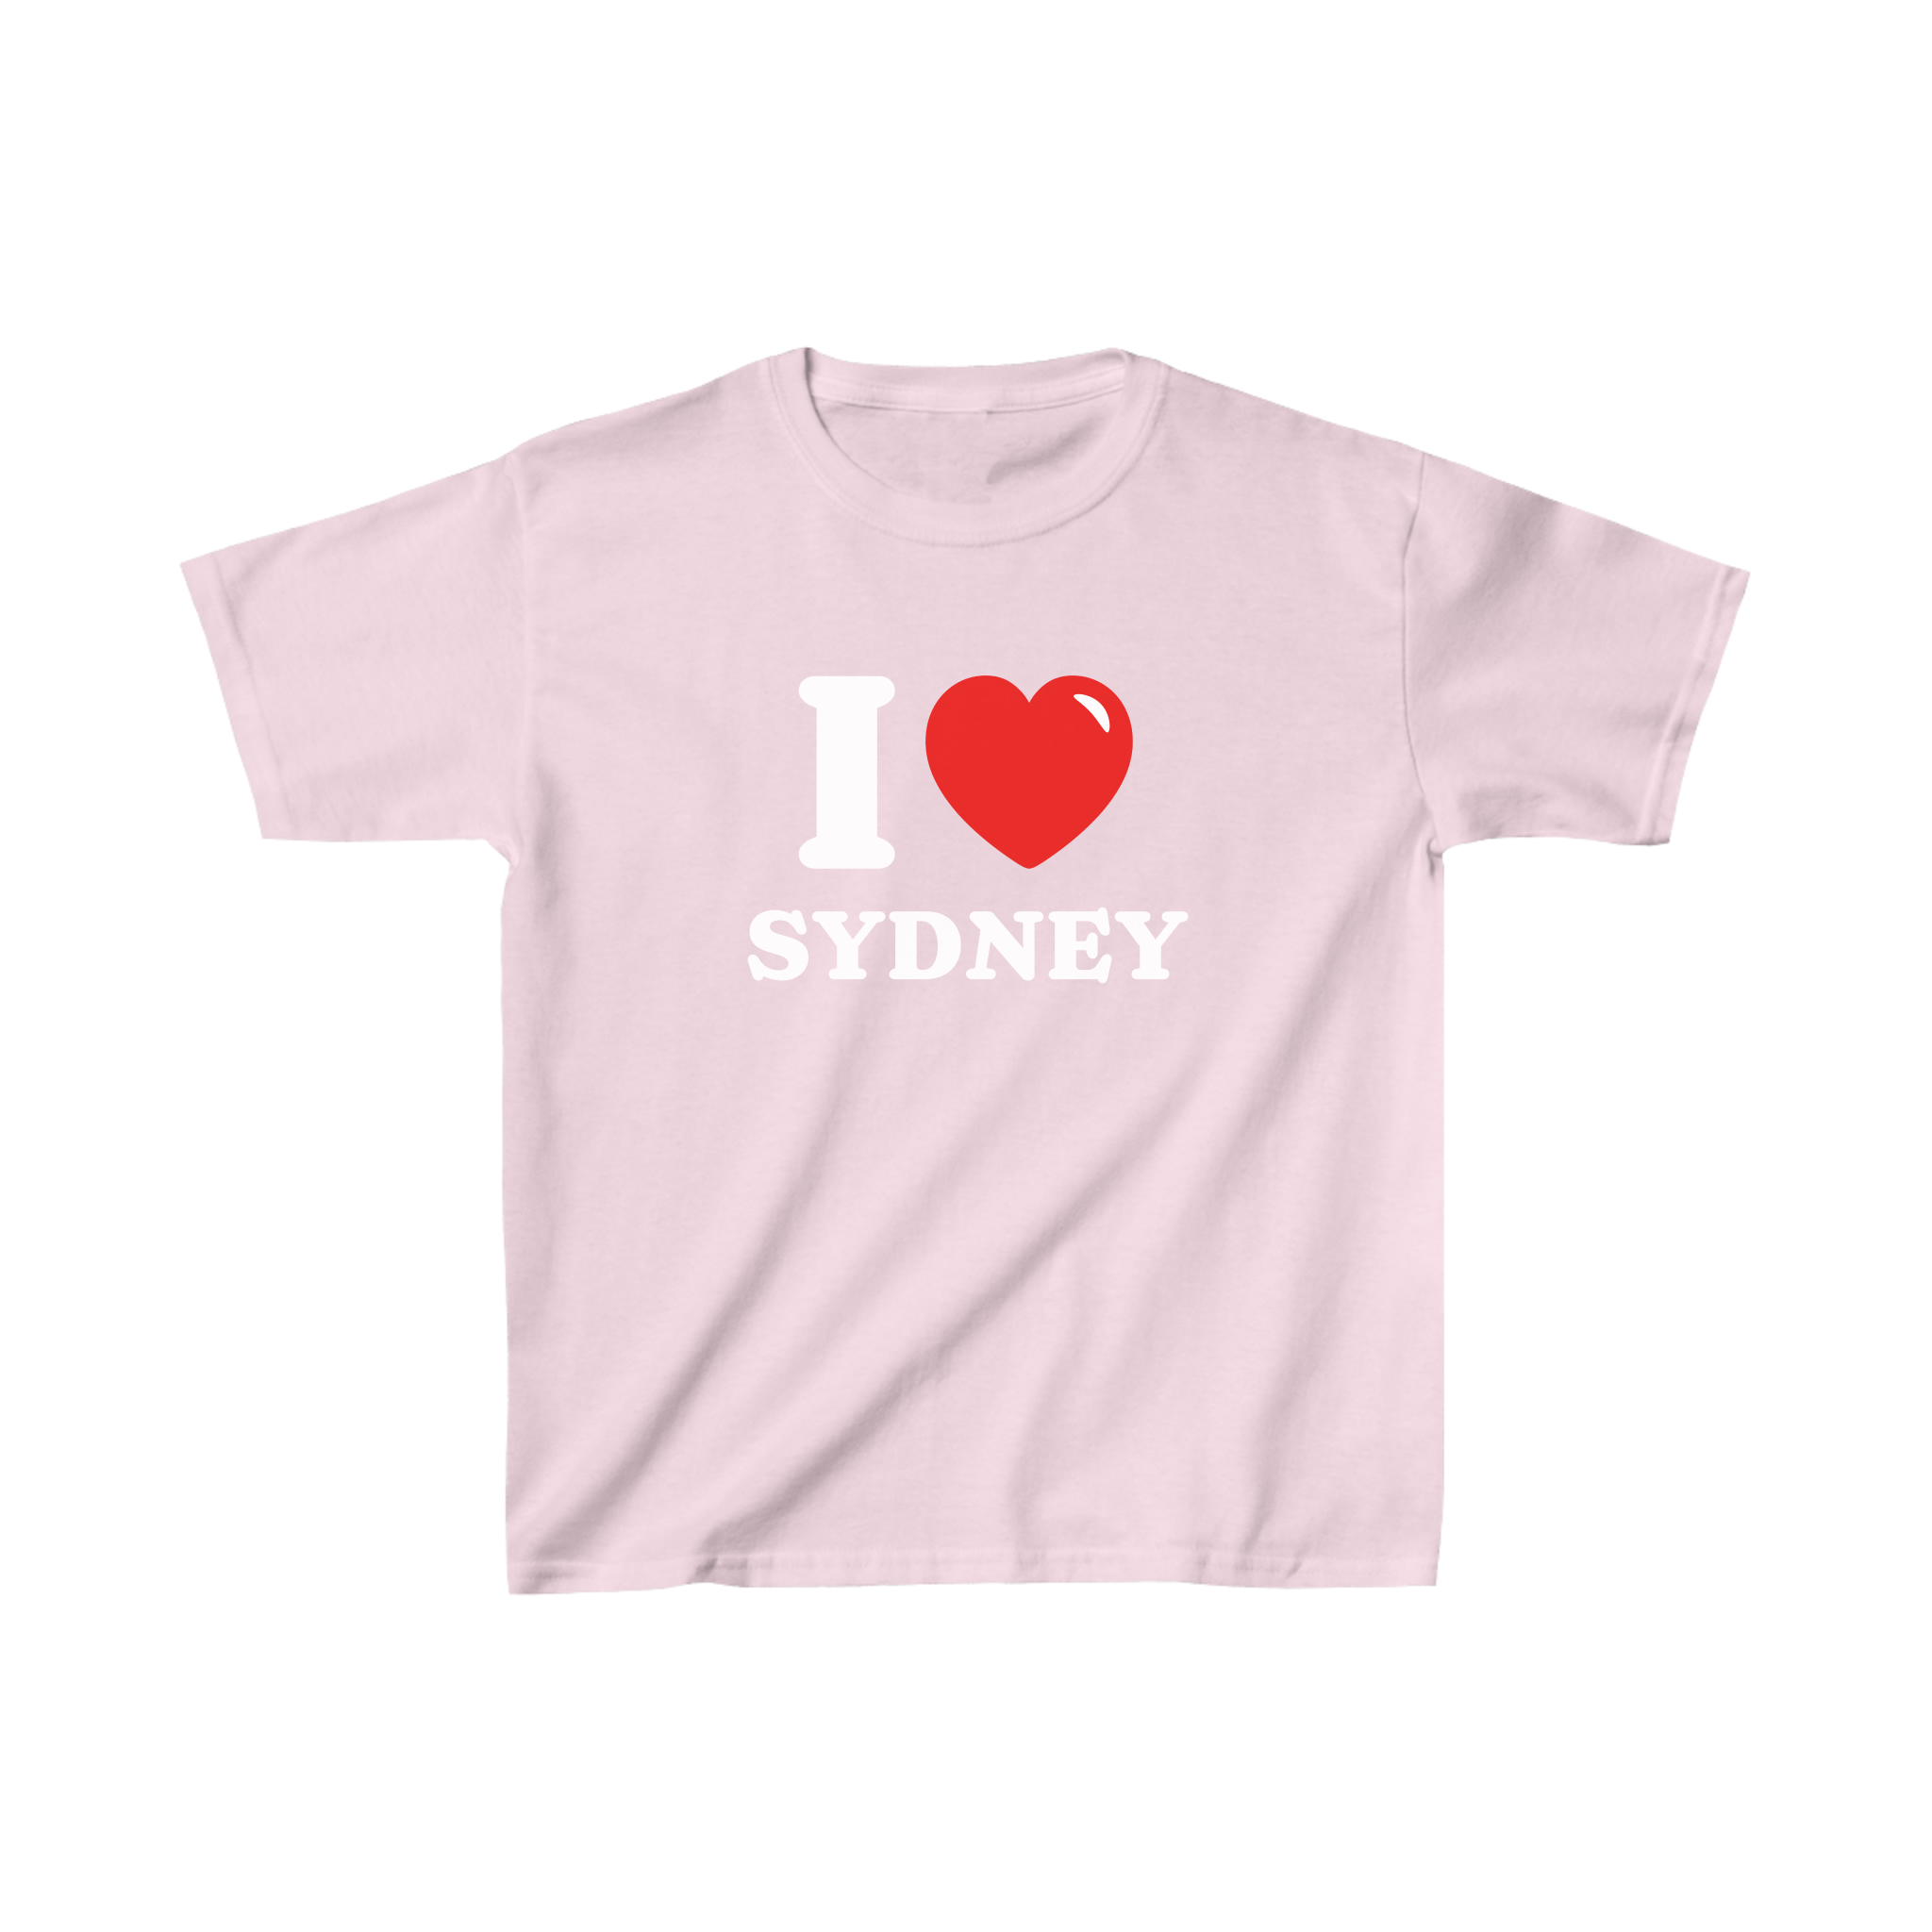 'I love Sydney' baby tee - In Print We Trust